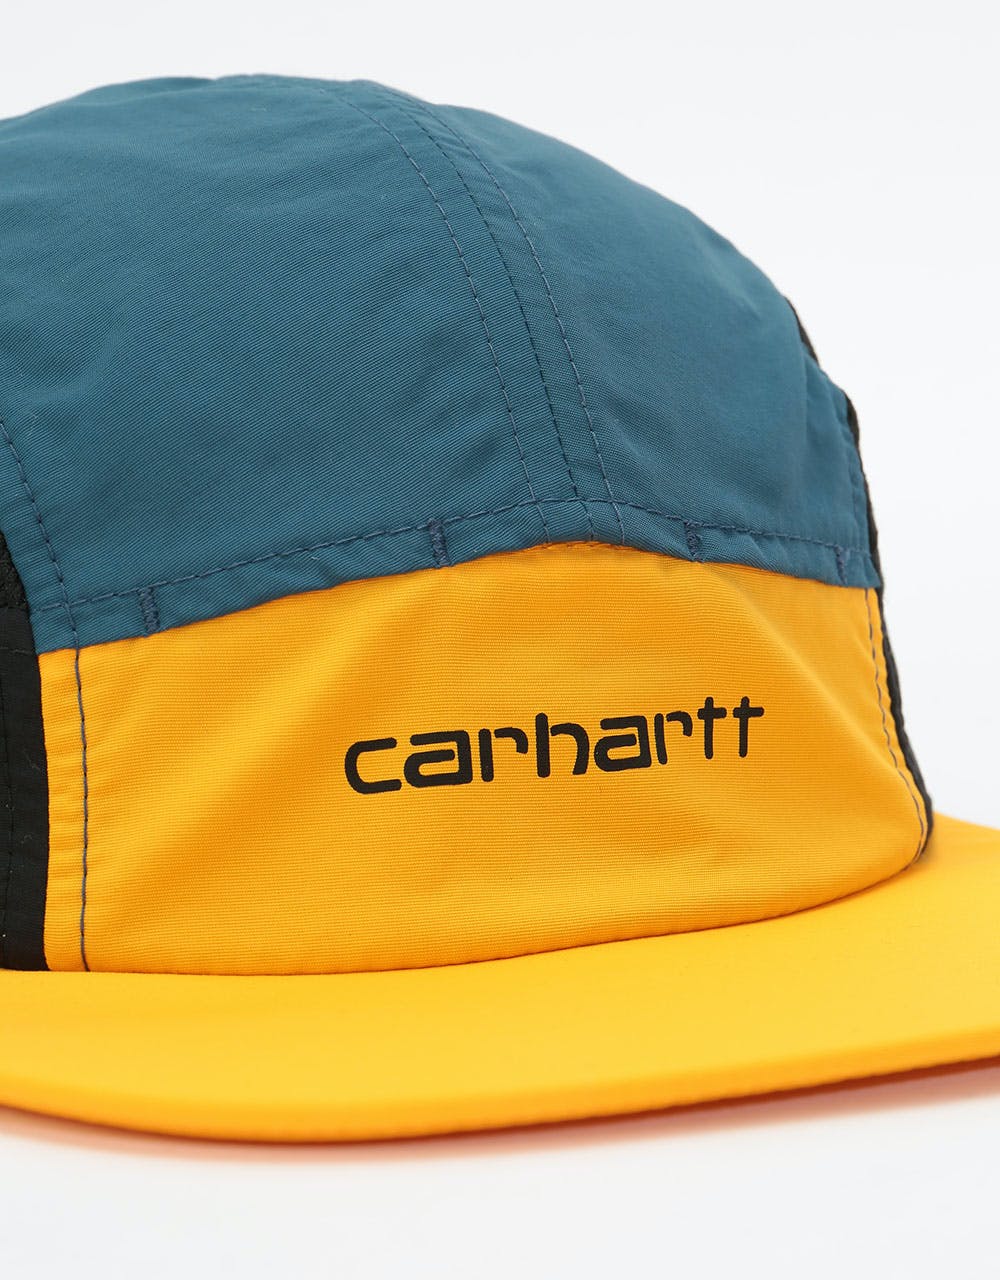 Carhartt WIP Barnes 5 Panel Cap - Colza/Duck Blue/Black